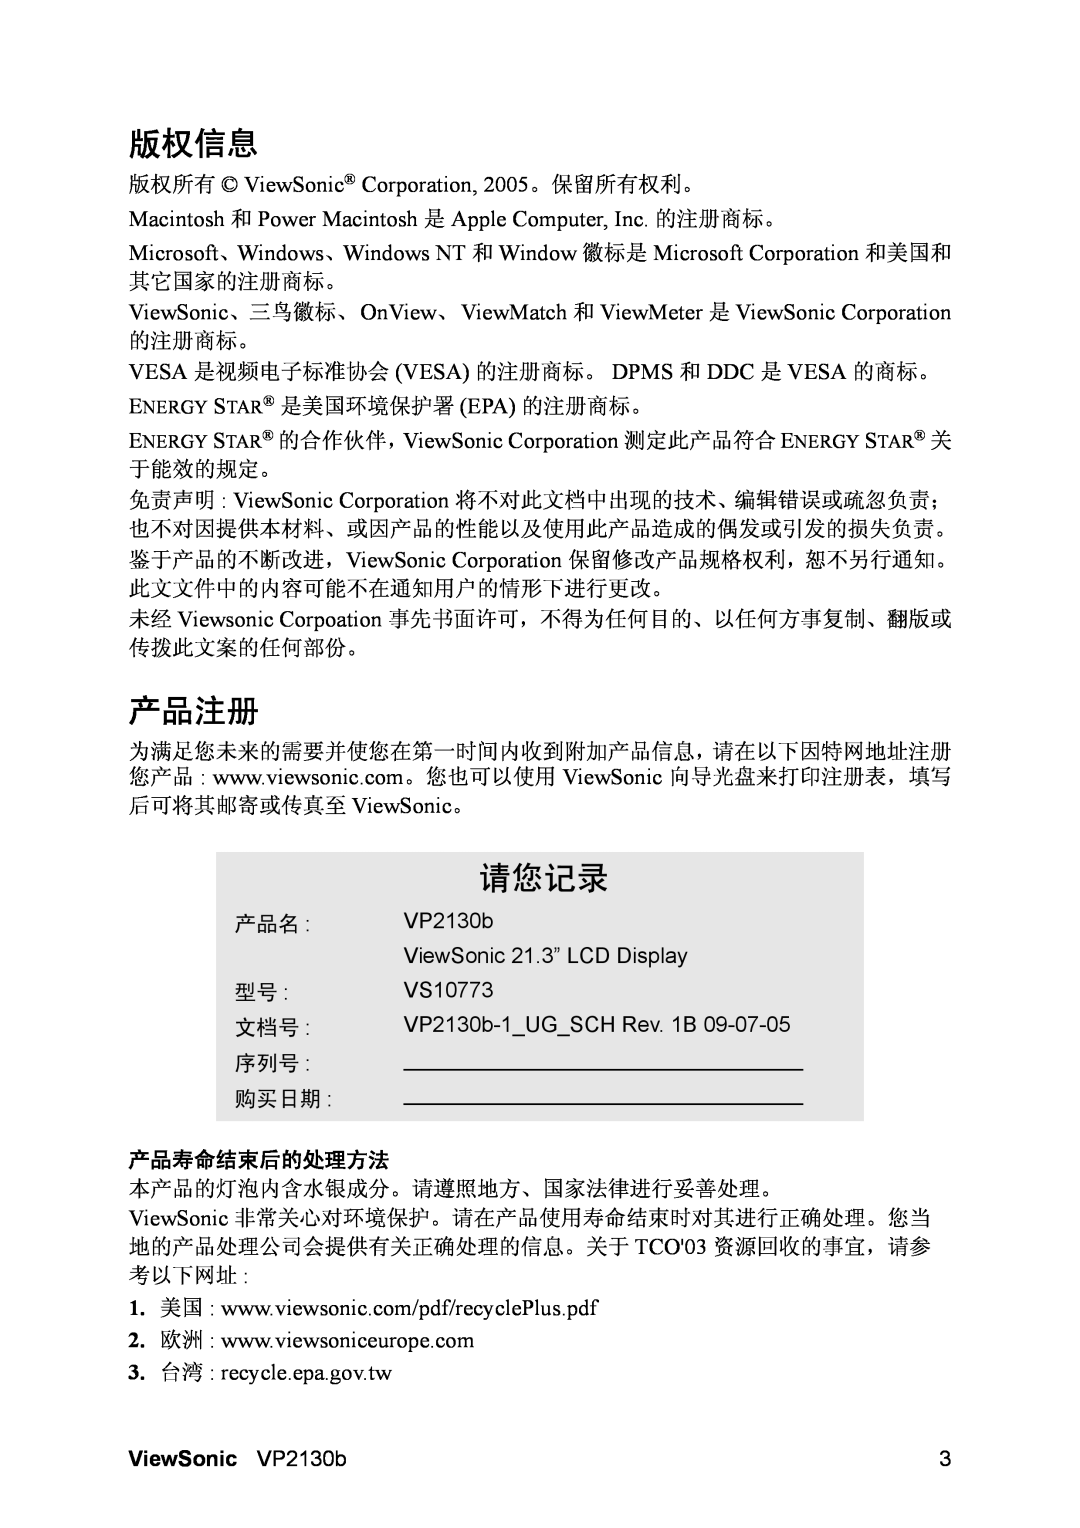 ViewSonic VP2130b-1 manual 版权信息, 产品注册, 请您记录, 3.台湾 recycle.epa.gov.tw, 产品寿命结束后的处理方法, ViewSonic VP2130b 